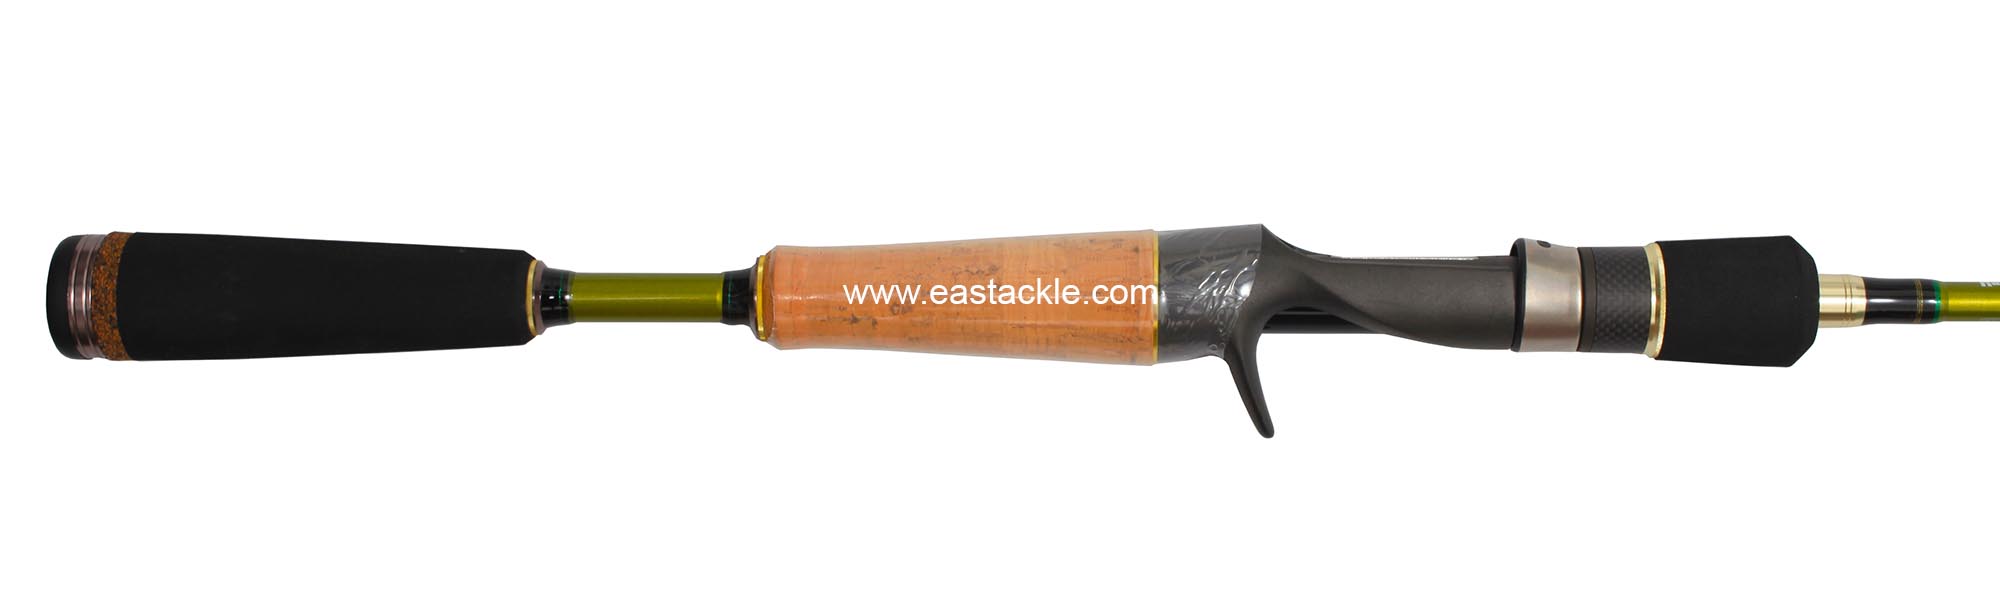 Rapala - Koivu - KVC651M - Bait Casting Rod - Handle Section (Side View) | Eastackle